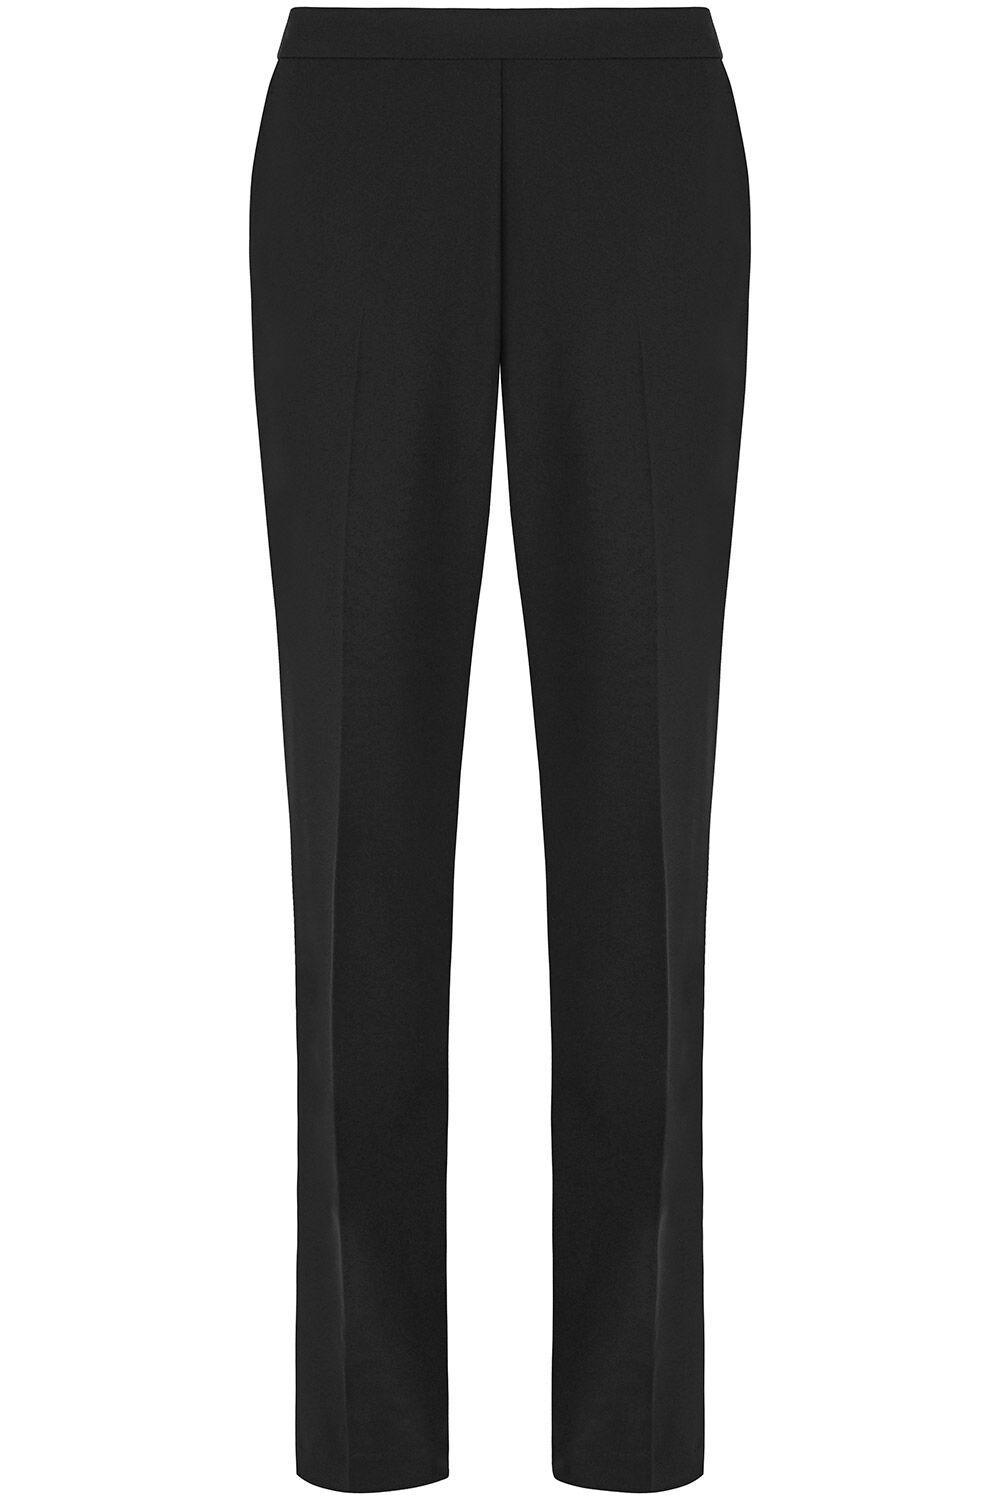 Bonmarche Plain Straight Leg Pull On Trouser - Black, Size: 14